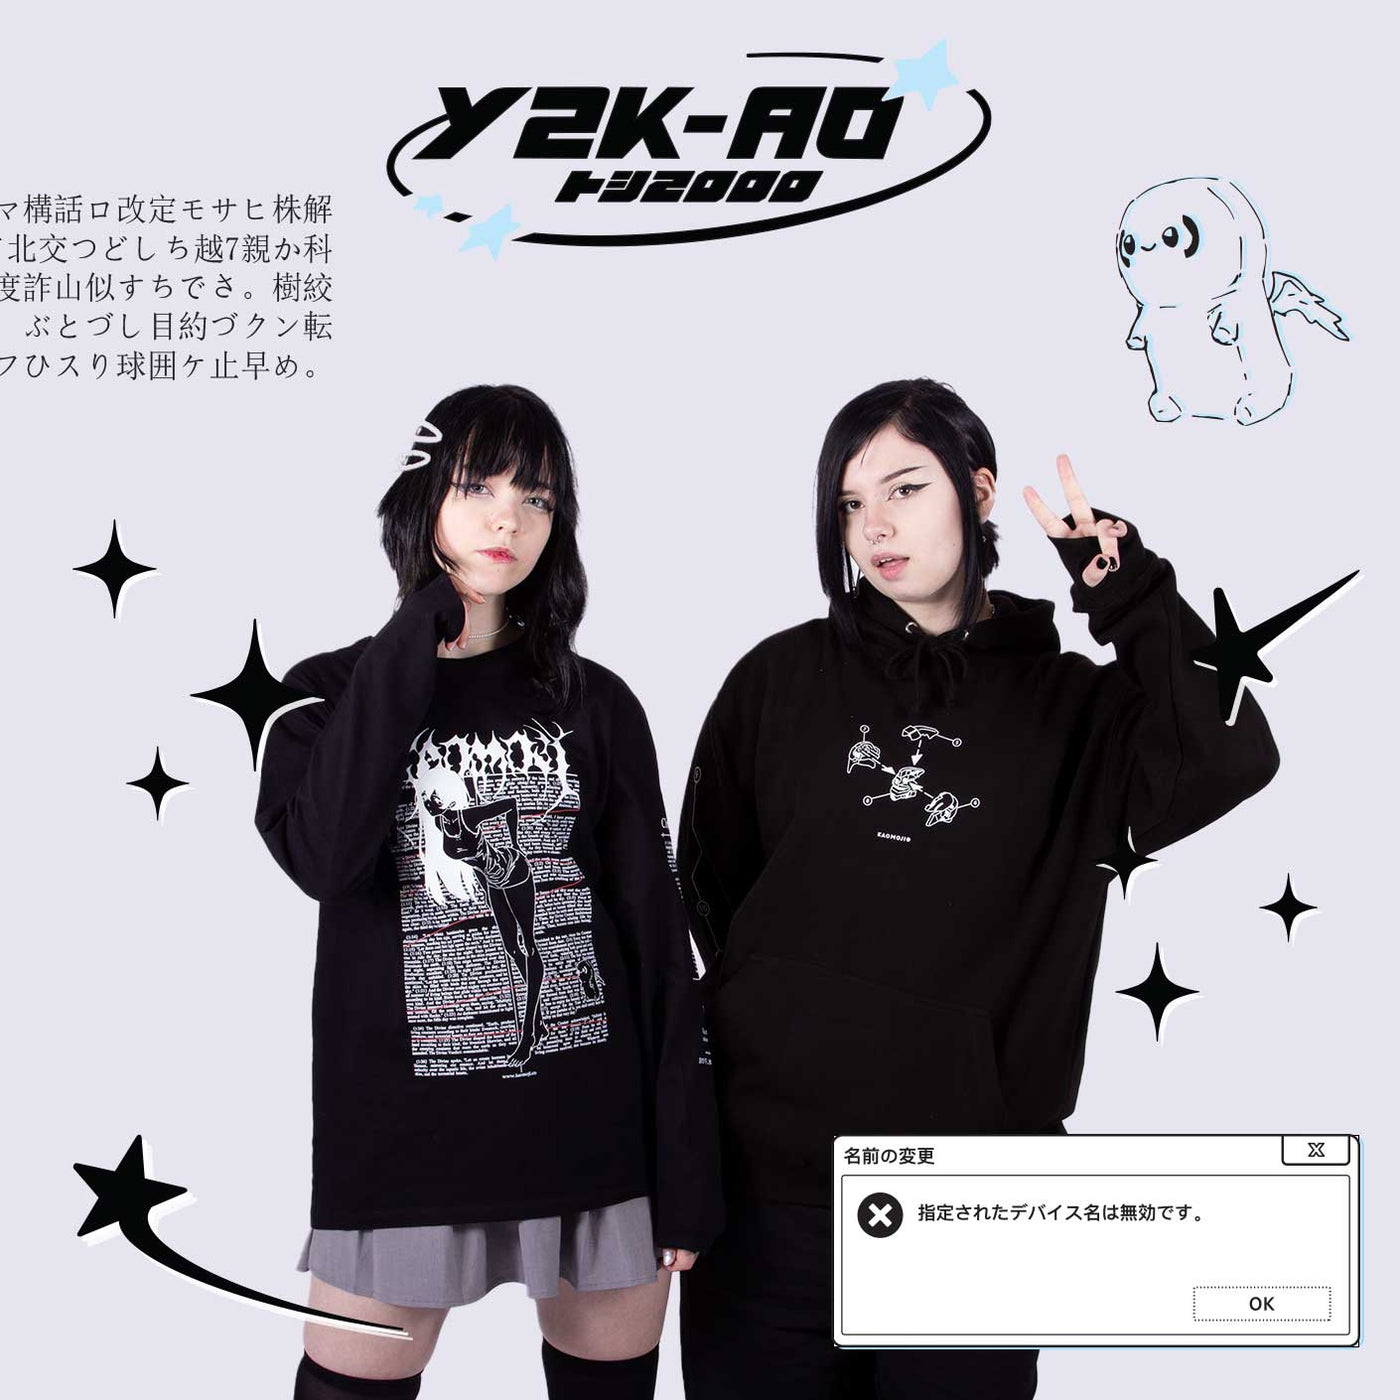 Shop Anime / Japanese Clothing – Kaomoji ® Official